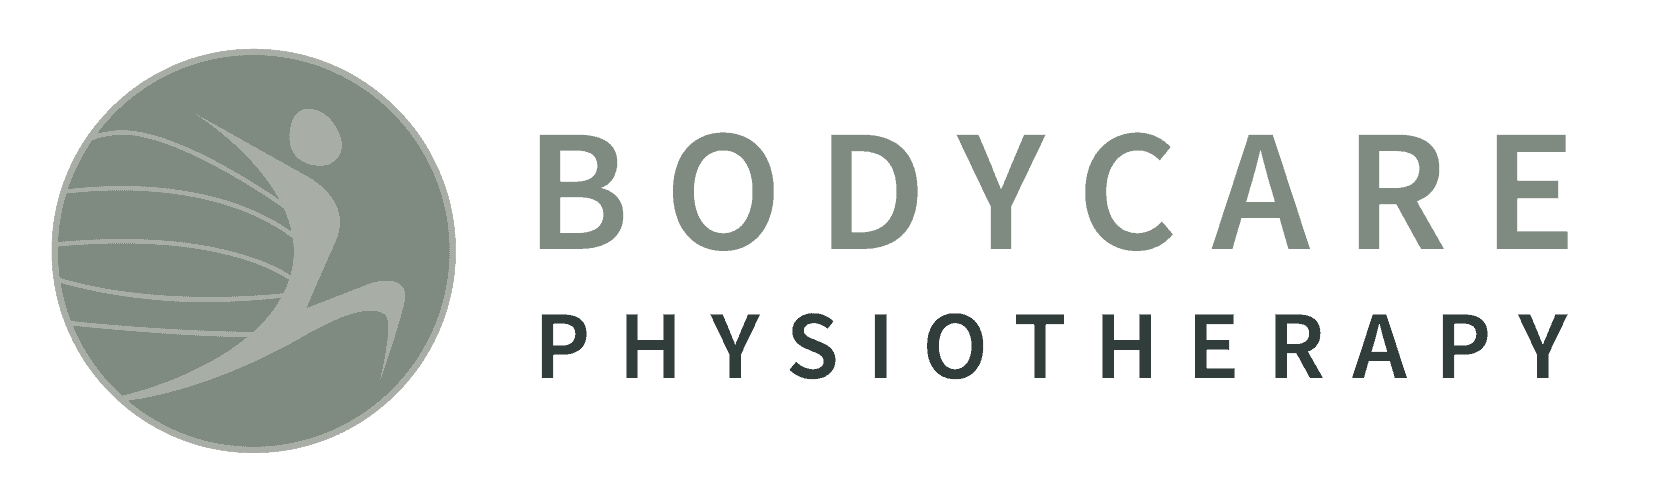 Bodycare physiotherapy logo